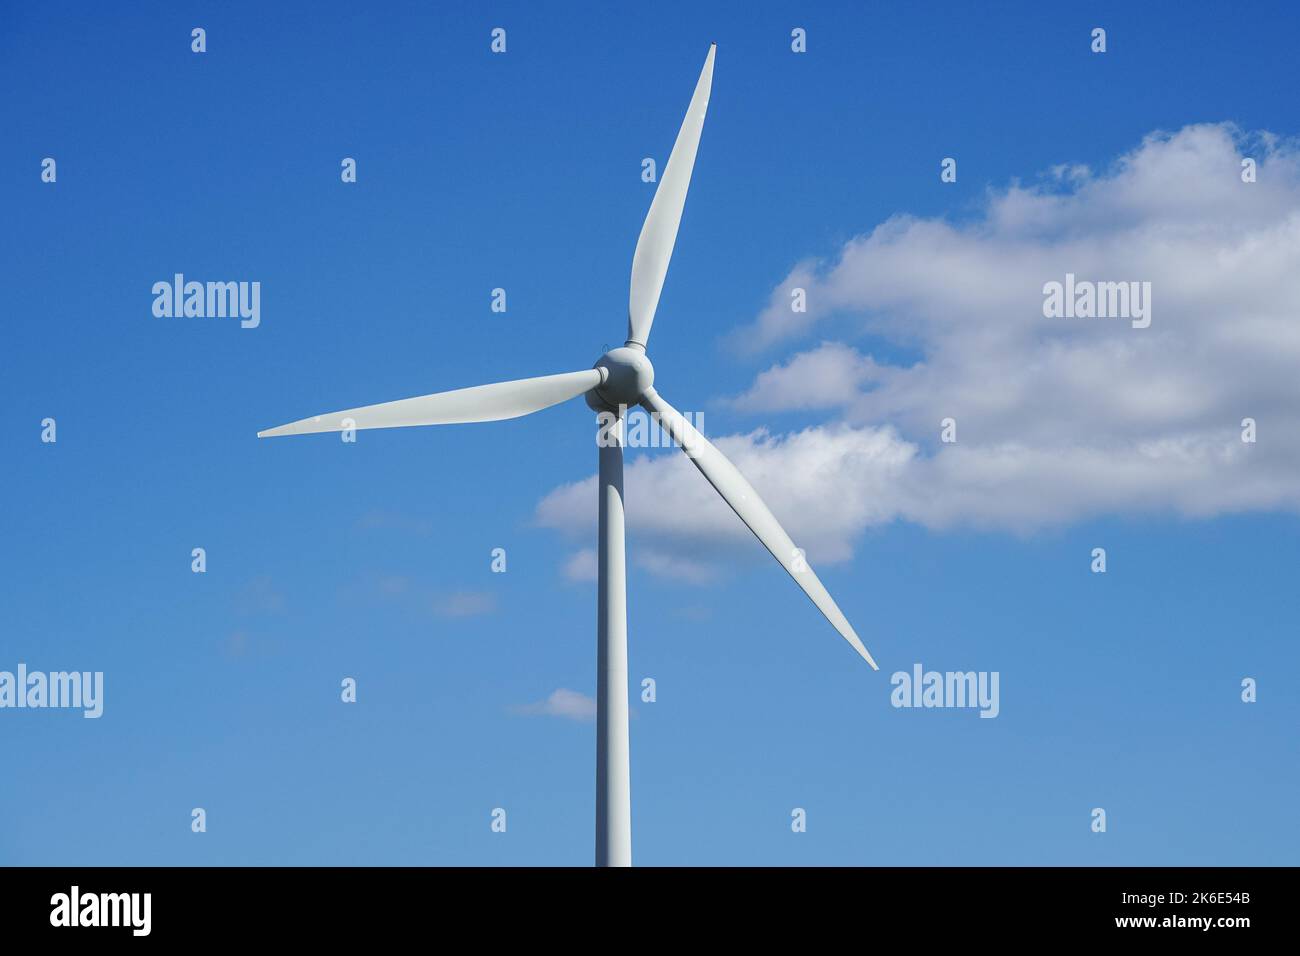 Wind turbine blades on blue sky background Stock Photo